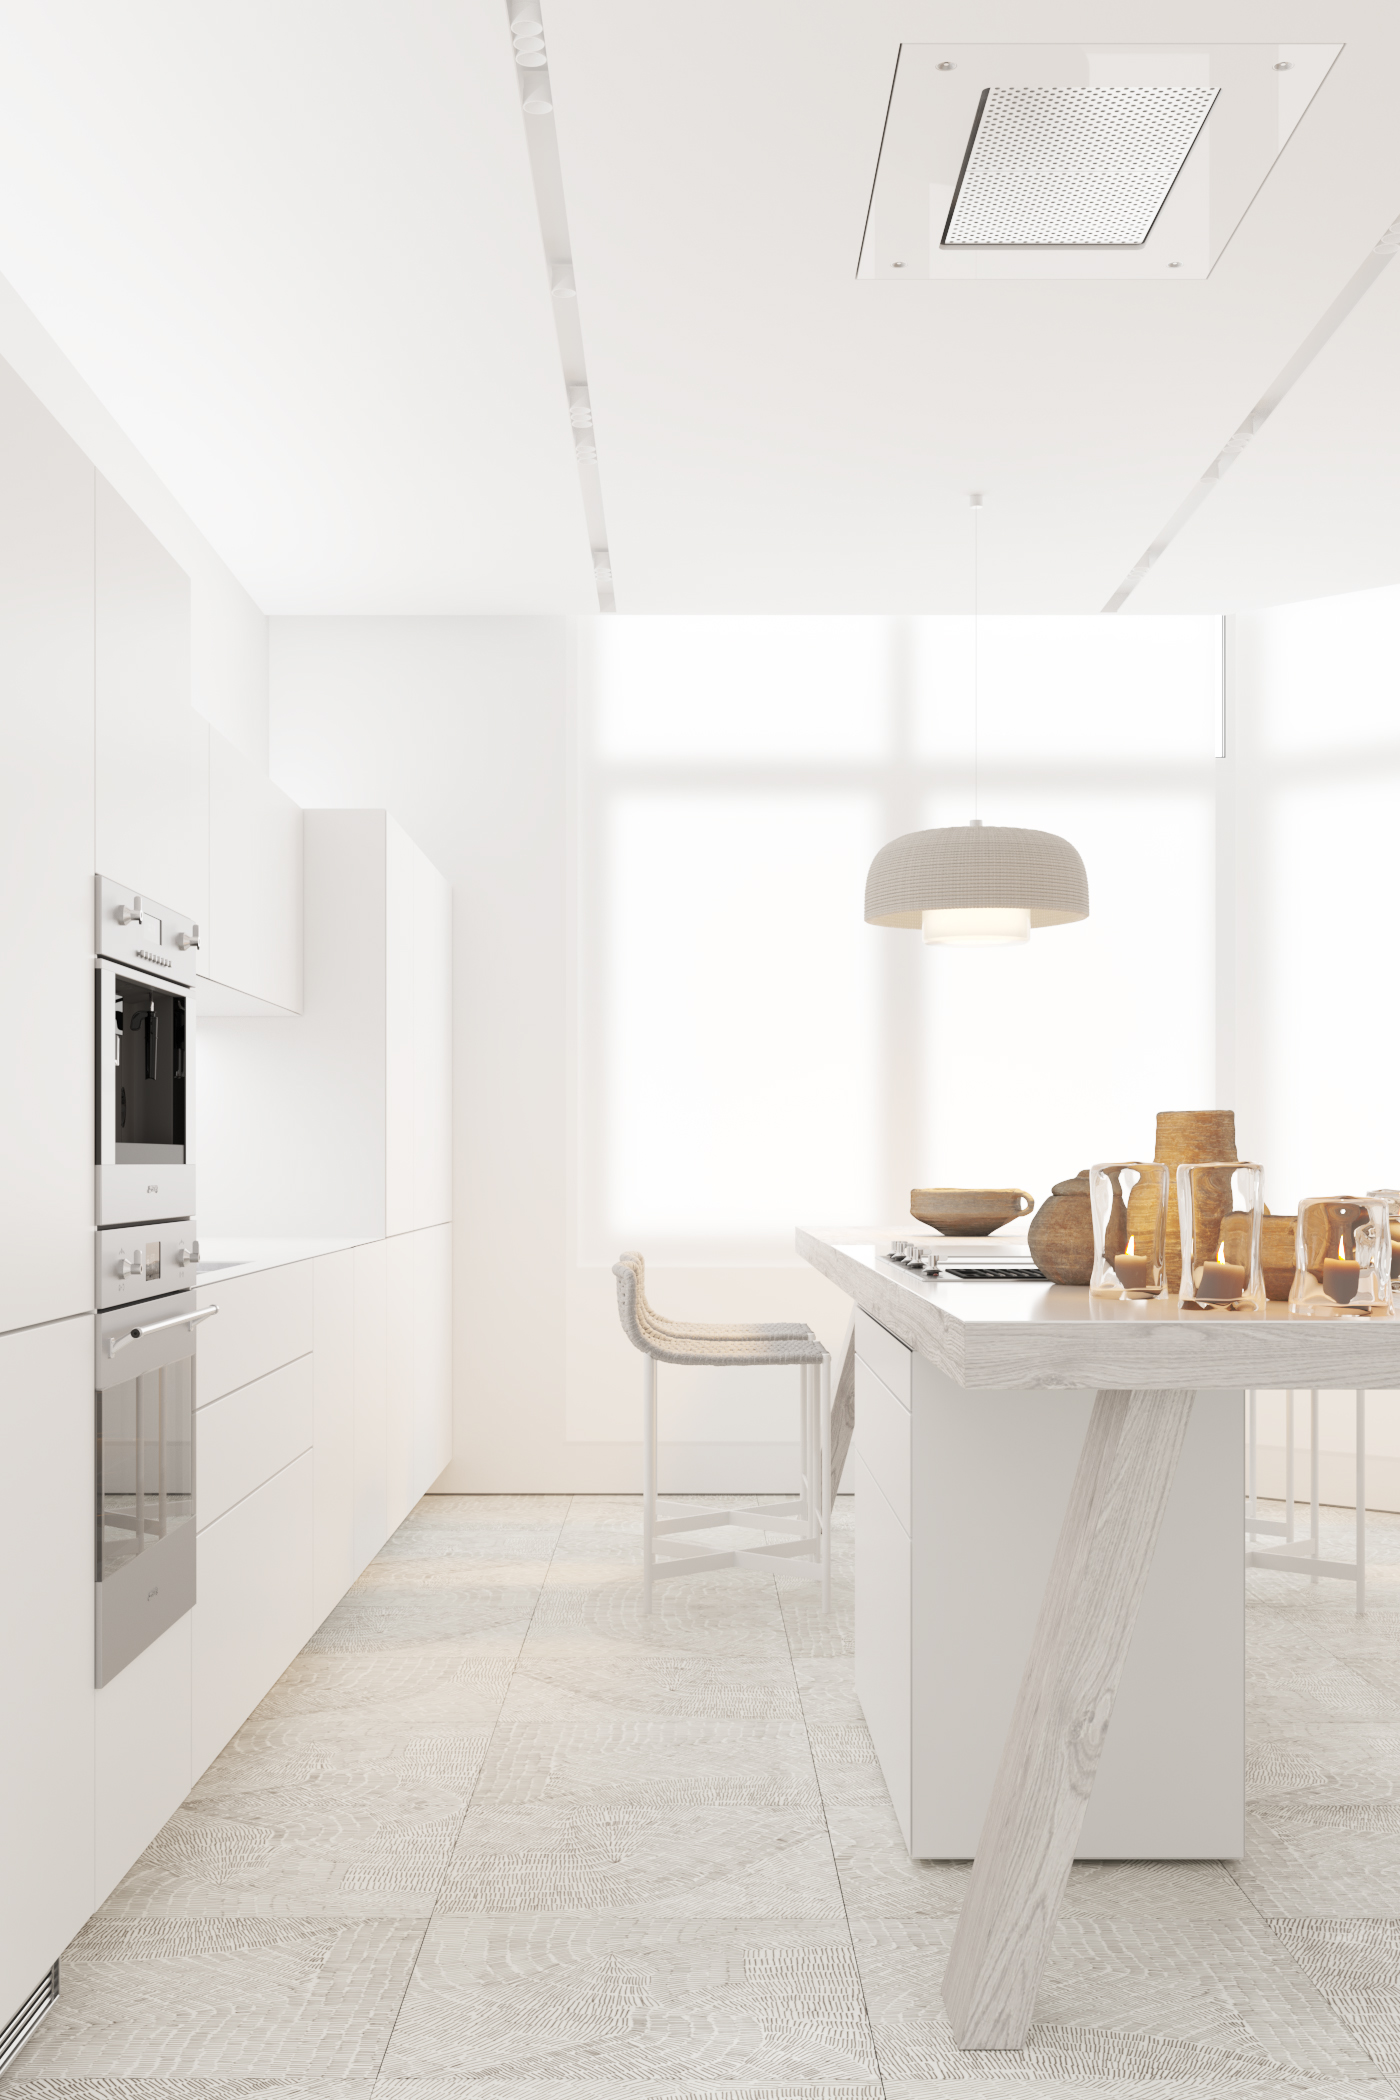 igorsirotov Interior minimalist kitchen bathroom bedroom kiev interiordesign White